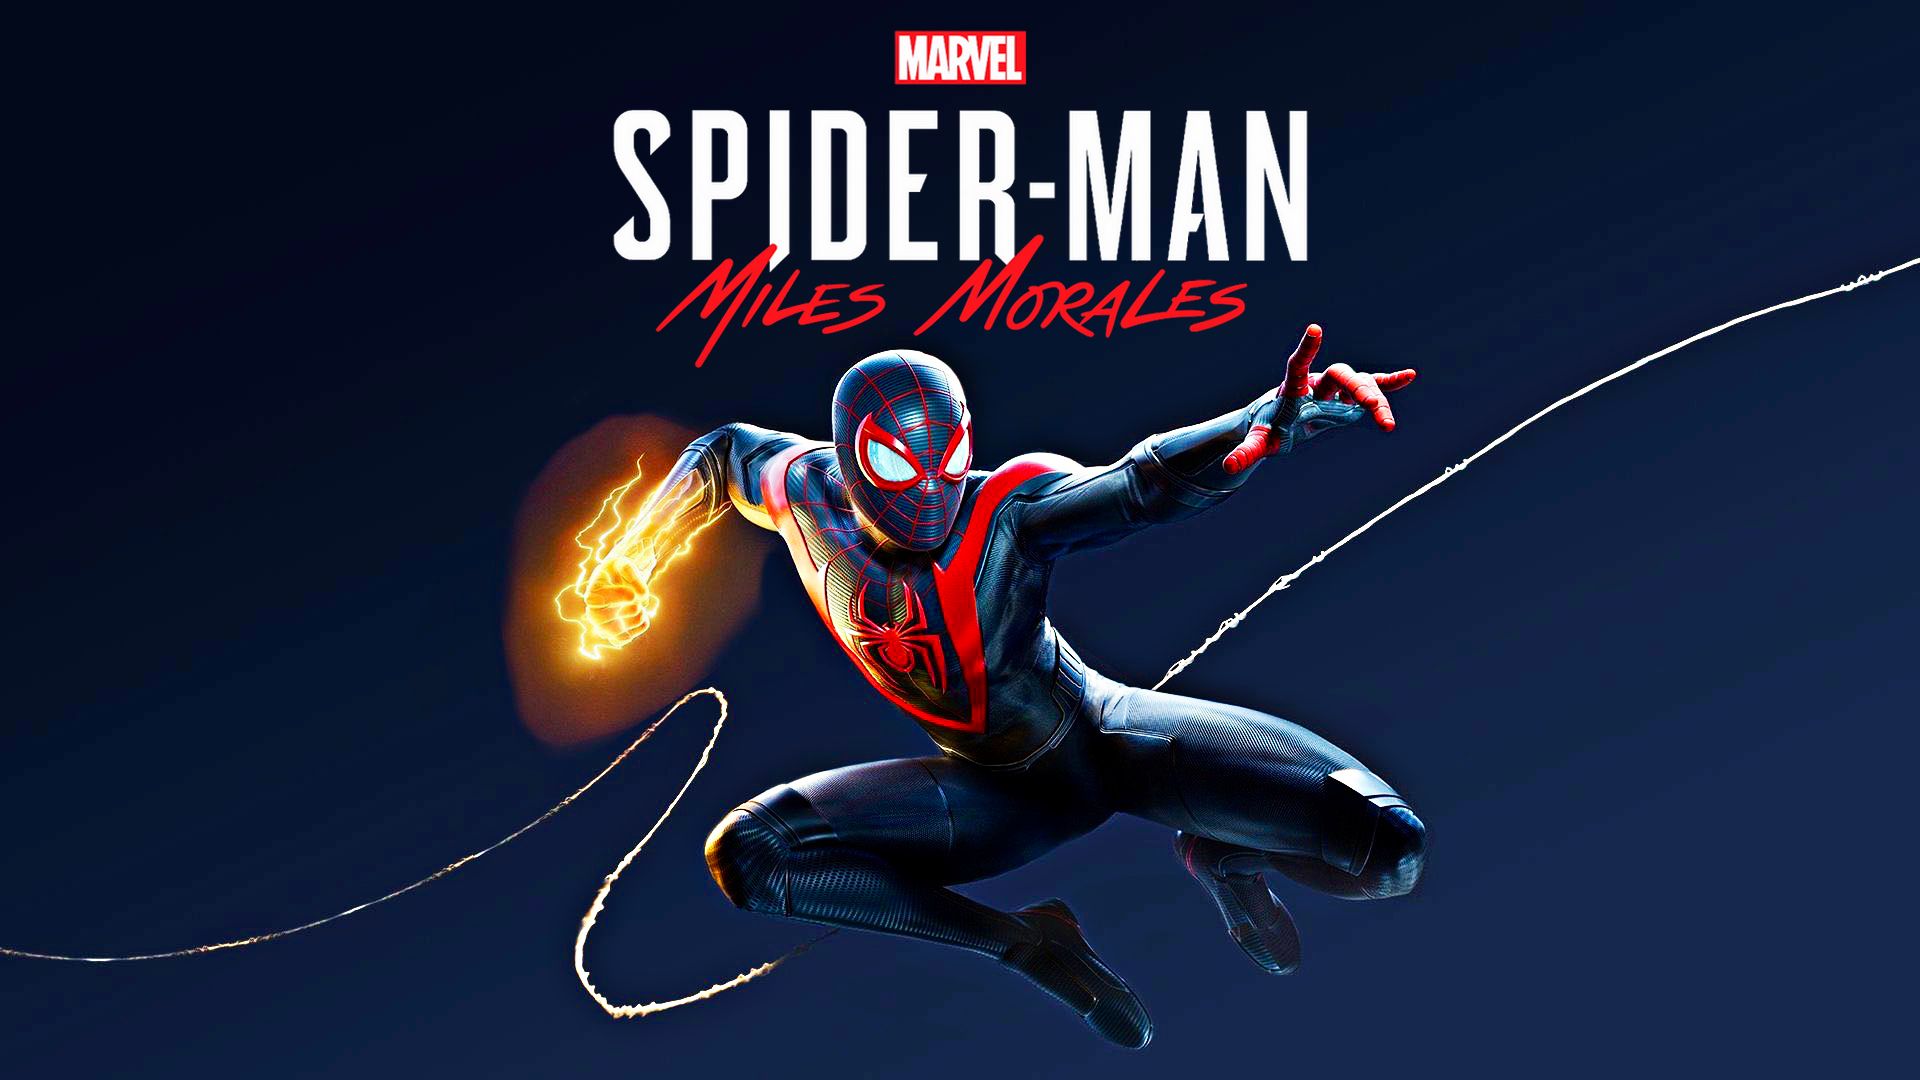 RATH'S REVIEWS: Spider Man: Miles Moralesraths Reviews.com